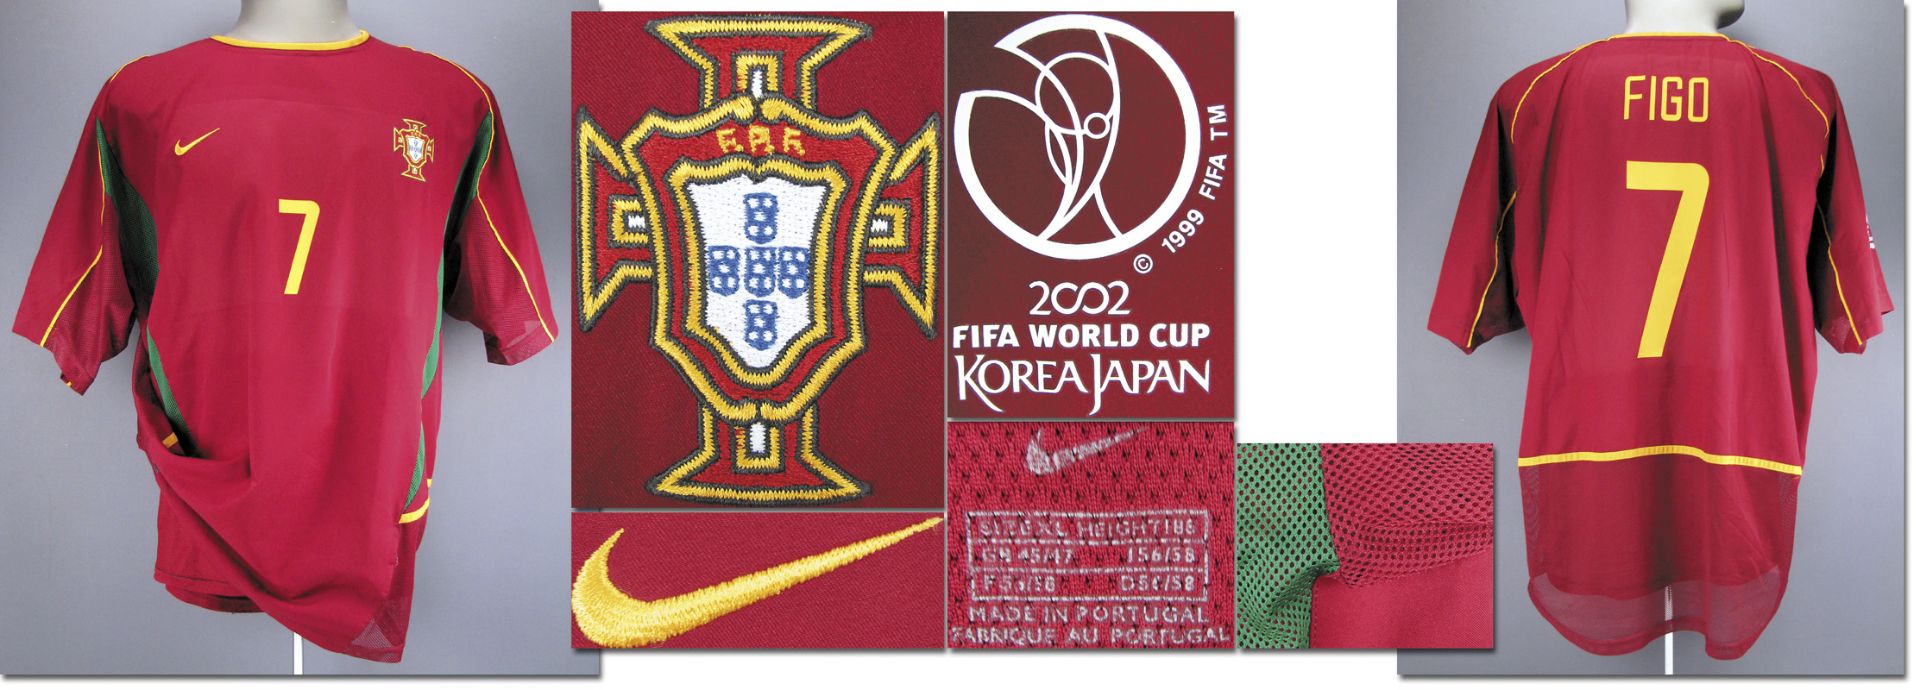 World Cup 2002 match worn football shirt Portugal - Original match worn shirt Portugla with number 7